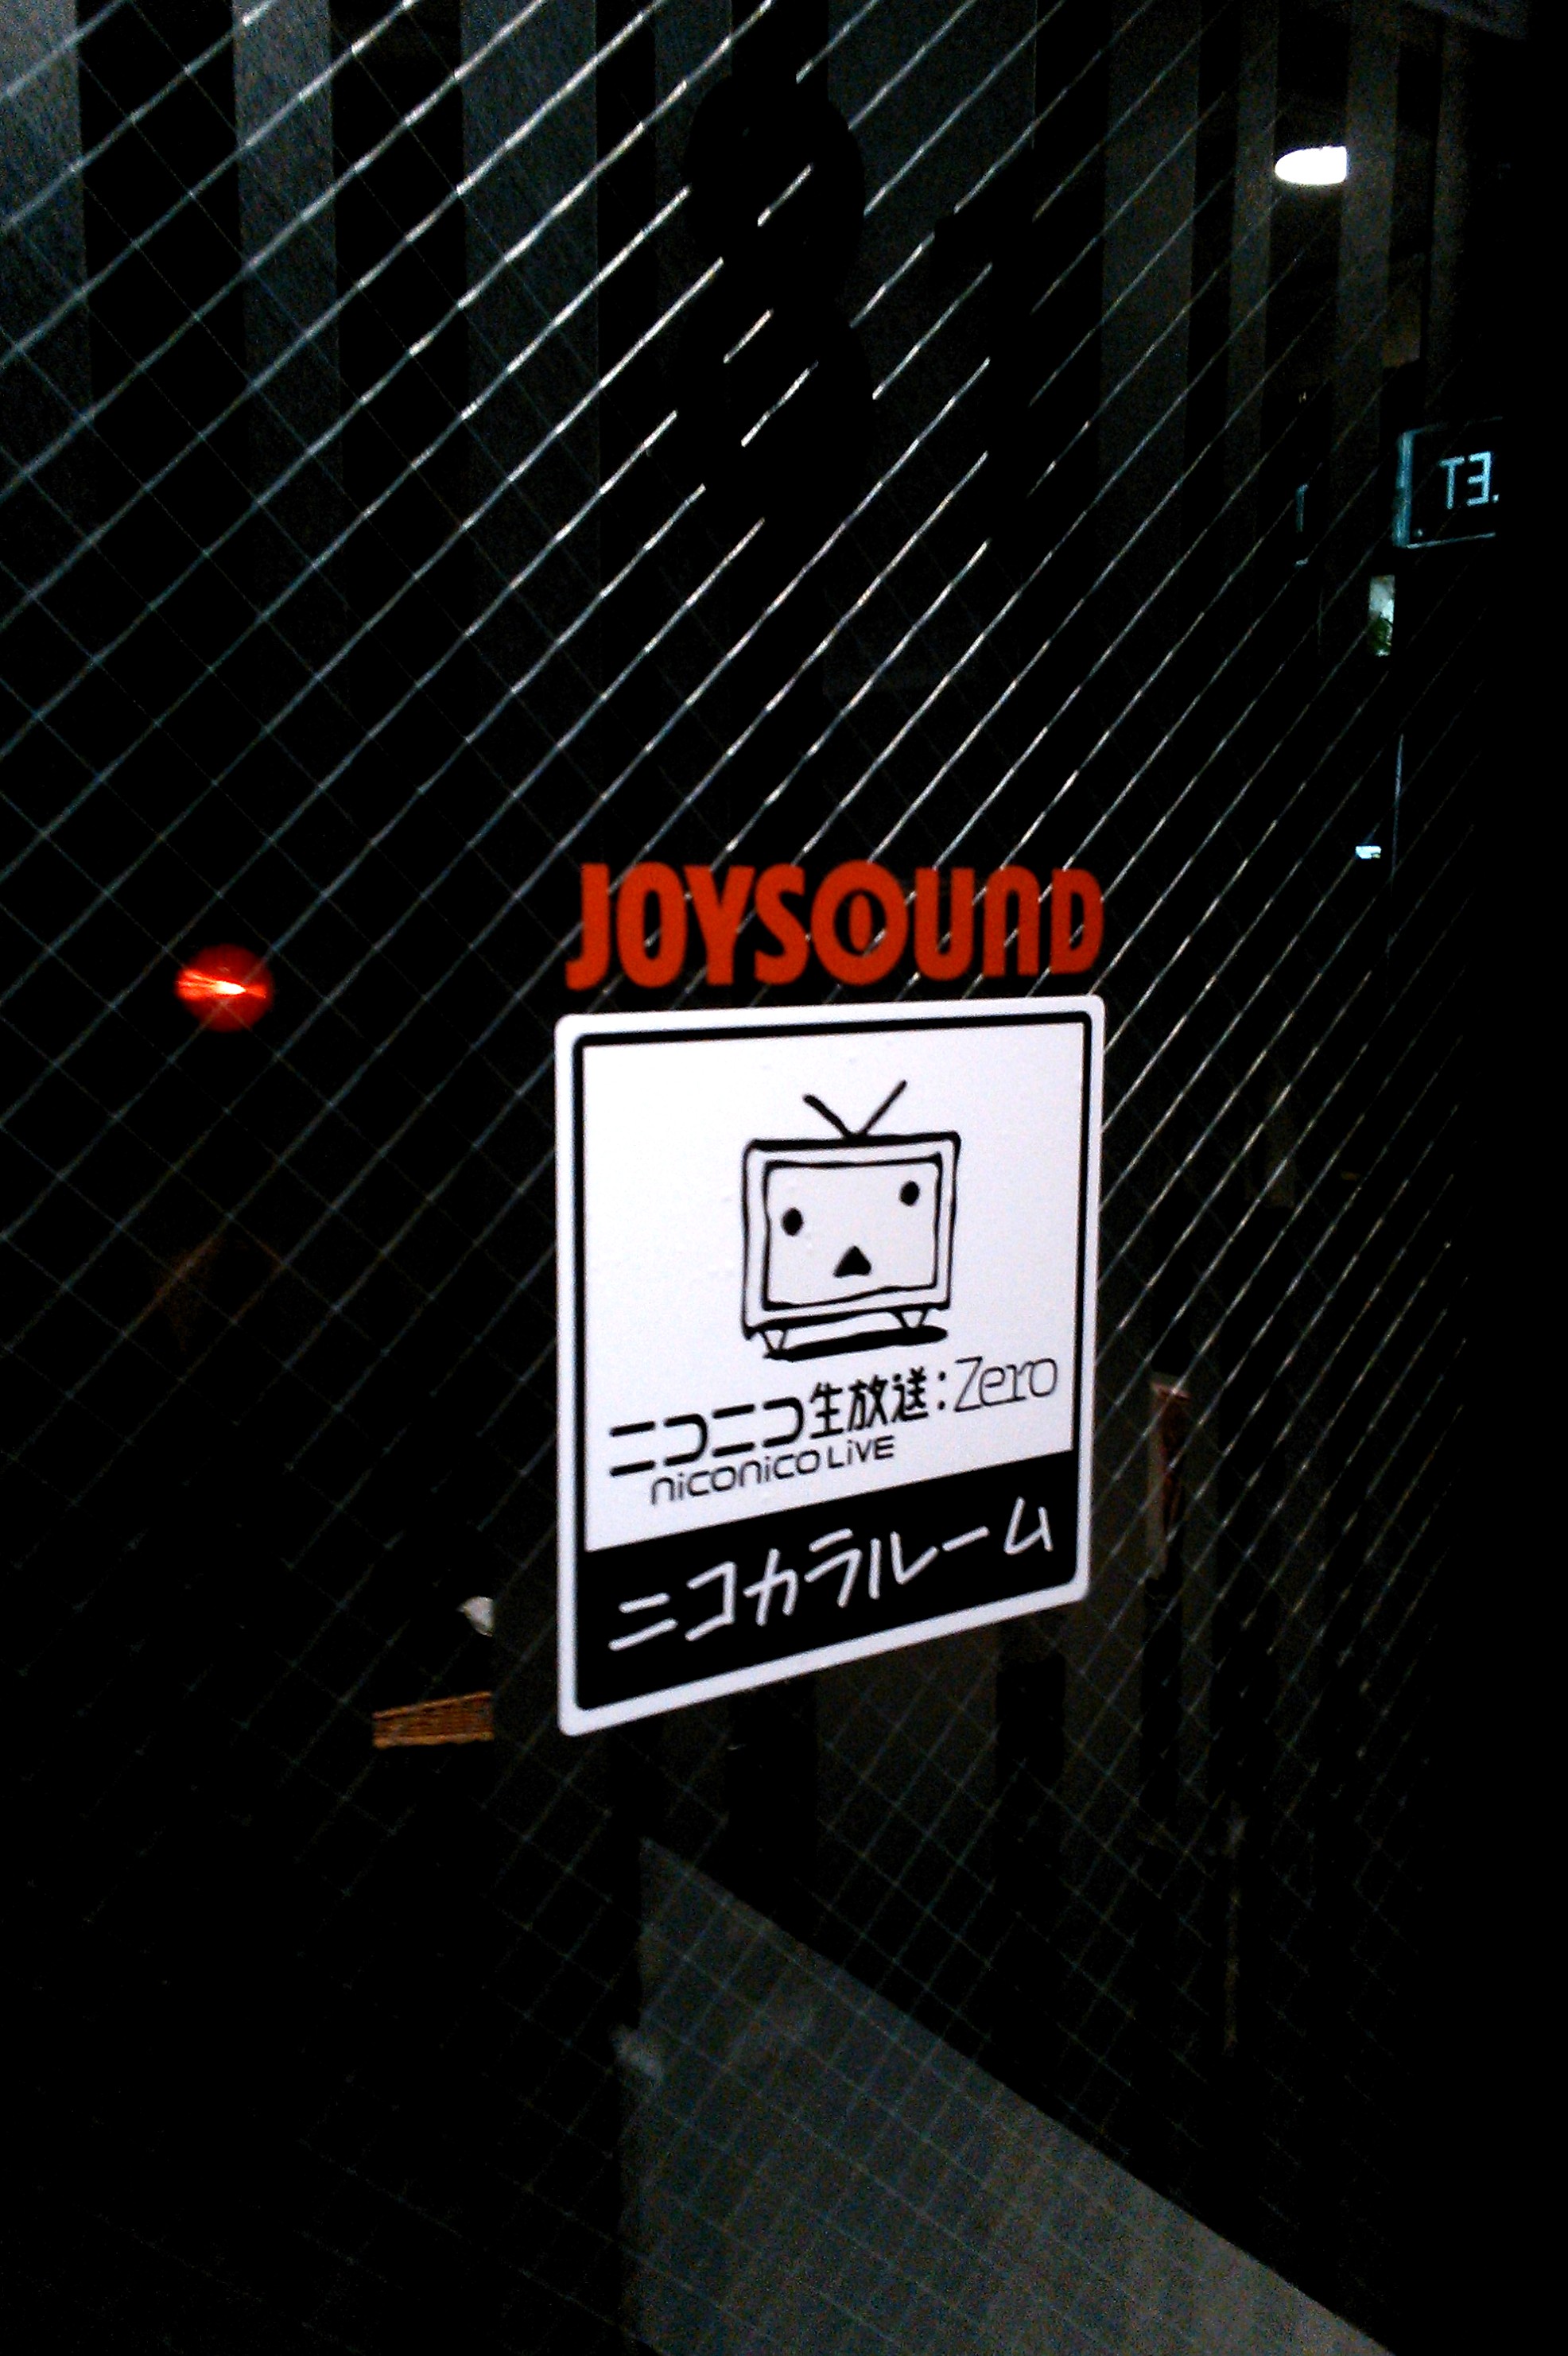 Joysoundのカラオケルームから 歌ってみた 動画を配信 ニコニコ 生放送に対応した ニコカラルーム が Joysound京橋 にオープン 株式会社エクシングのプレスリリース